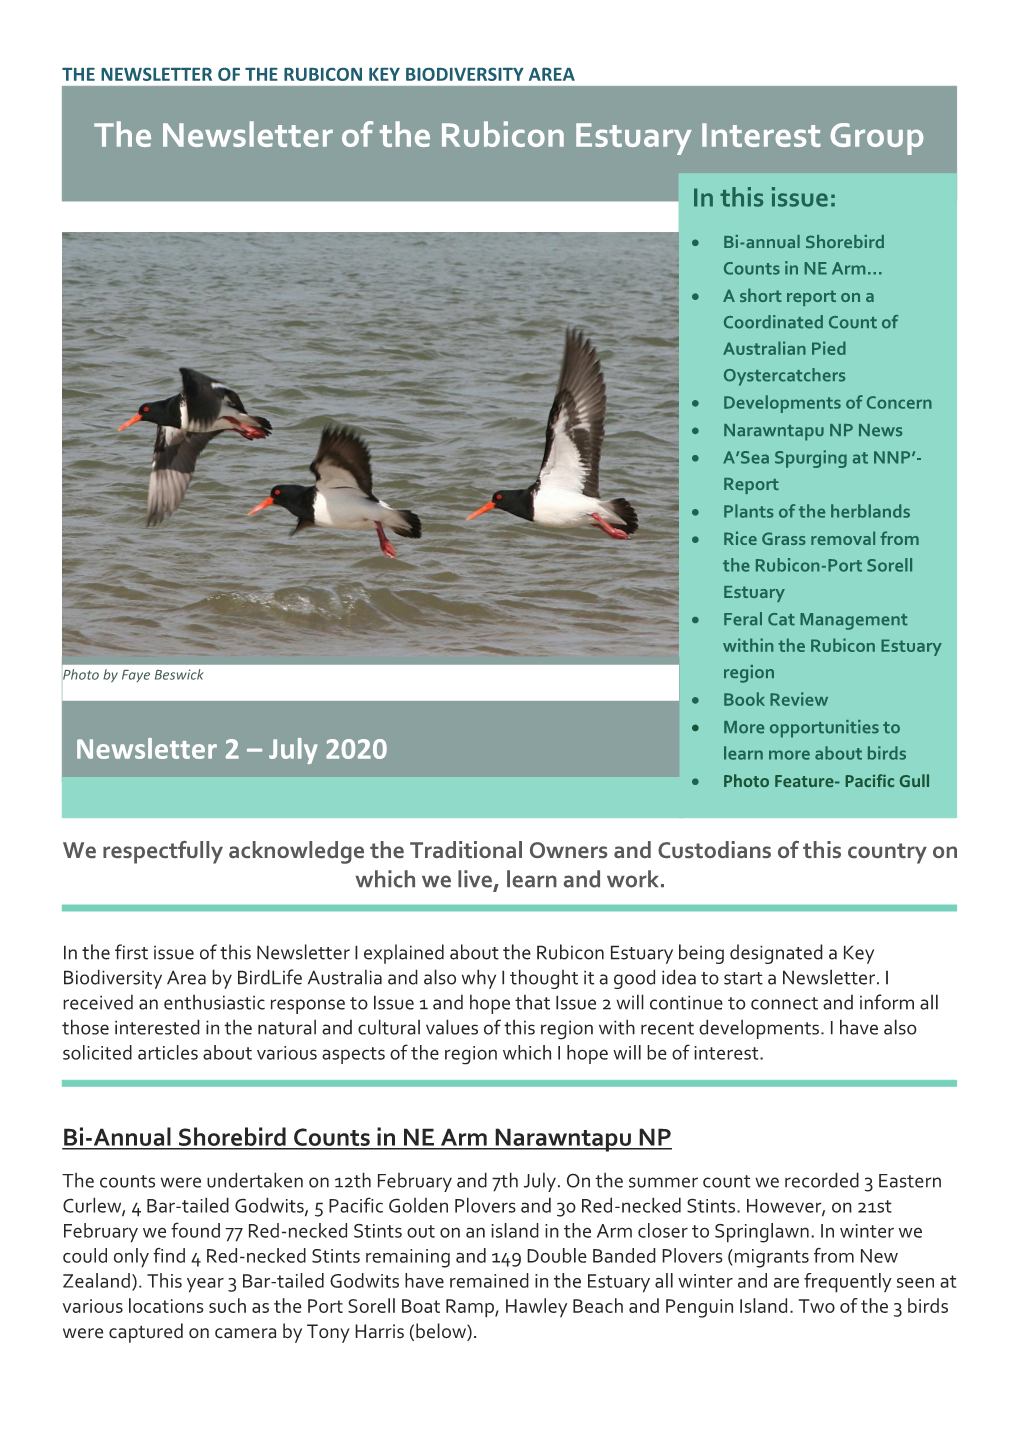 The Newsletter of the Rubicon Estuary Interest Group